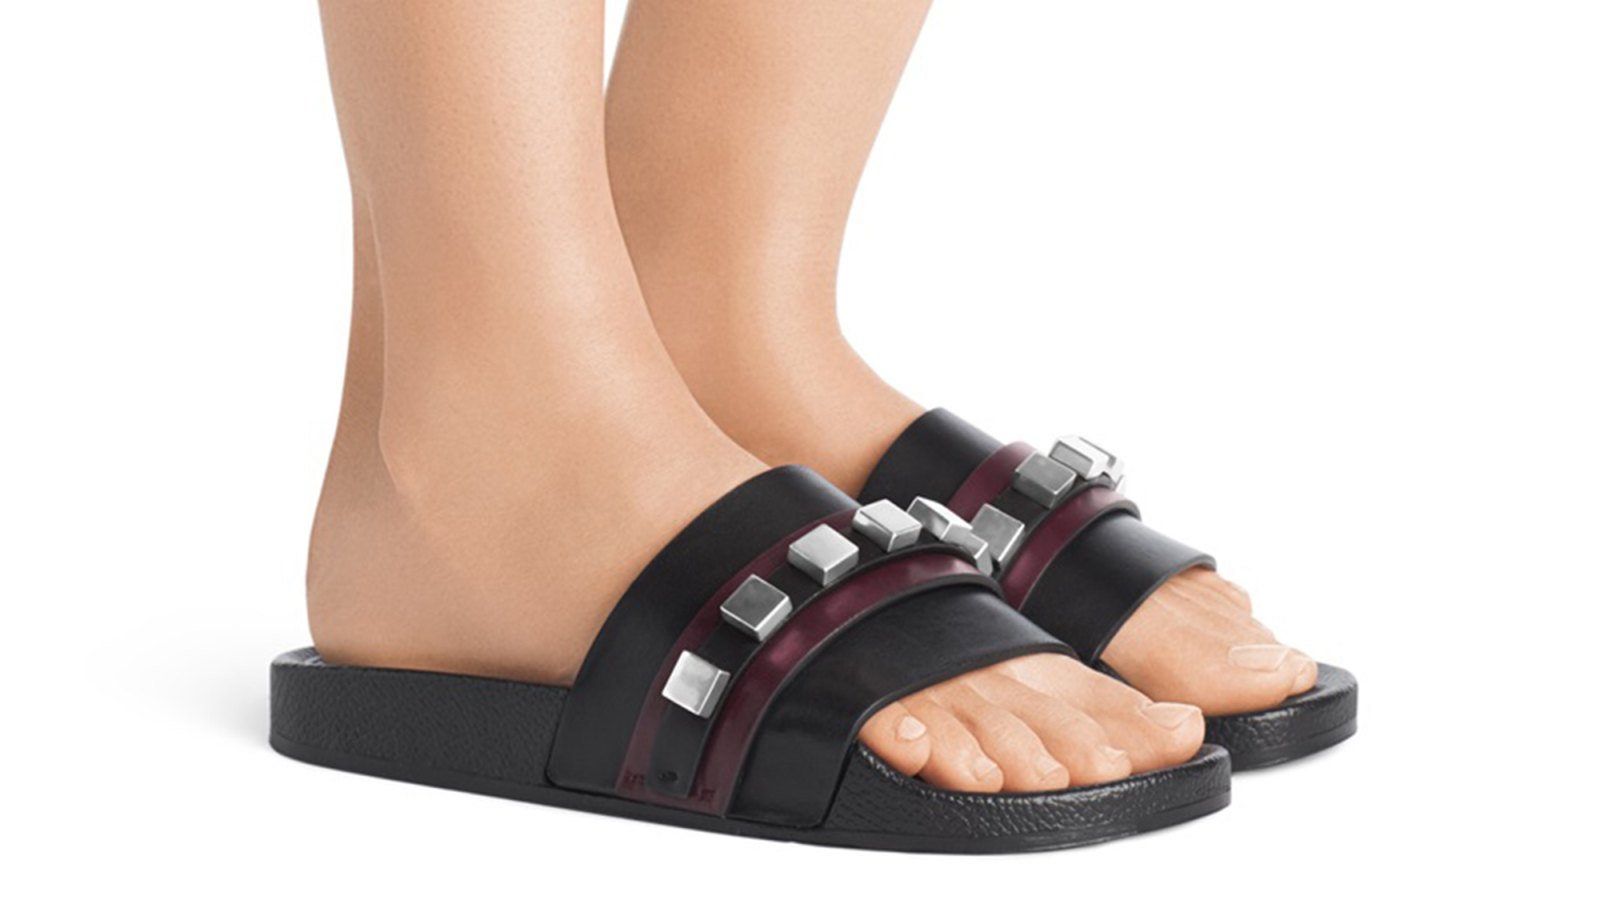 SW sandals